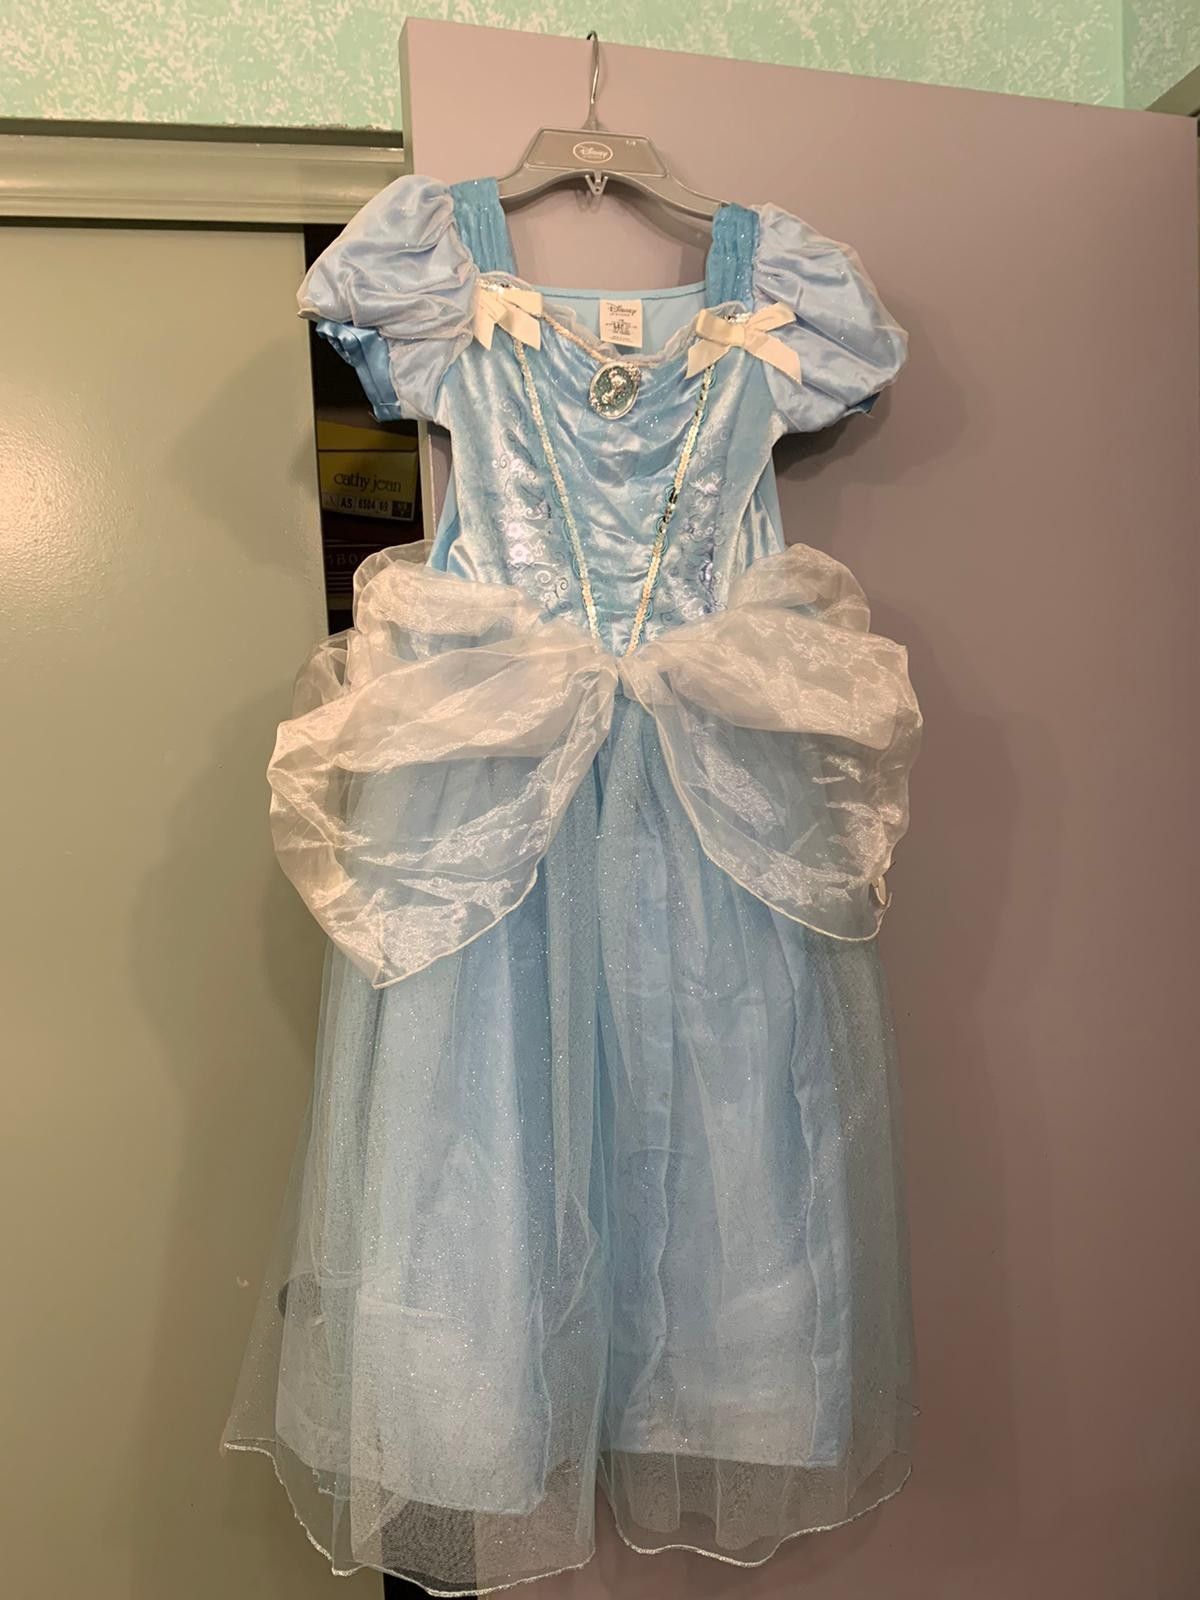 Cinderella dress size 7/8